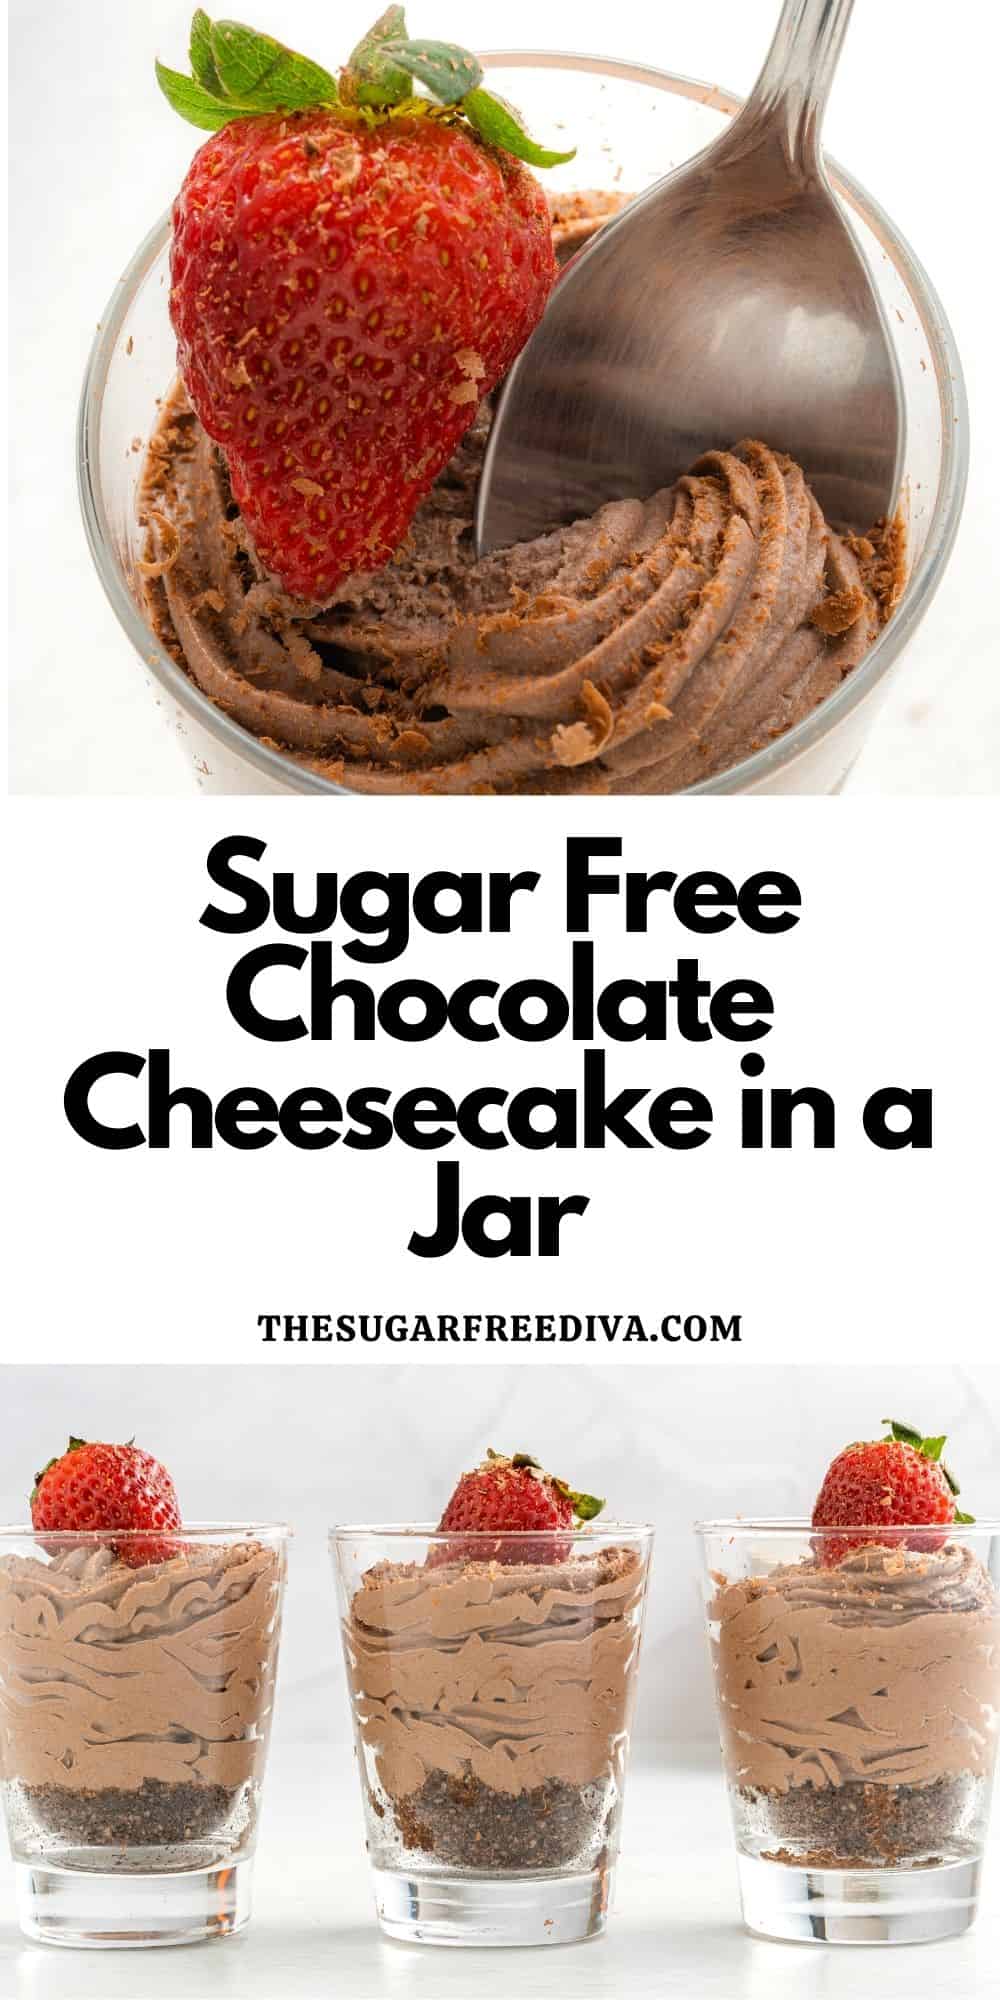 Sugar Free Chocolate Cheesecake in a Jar, a delicious chocolatey jar dessert recipe made with no added sugar.